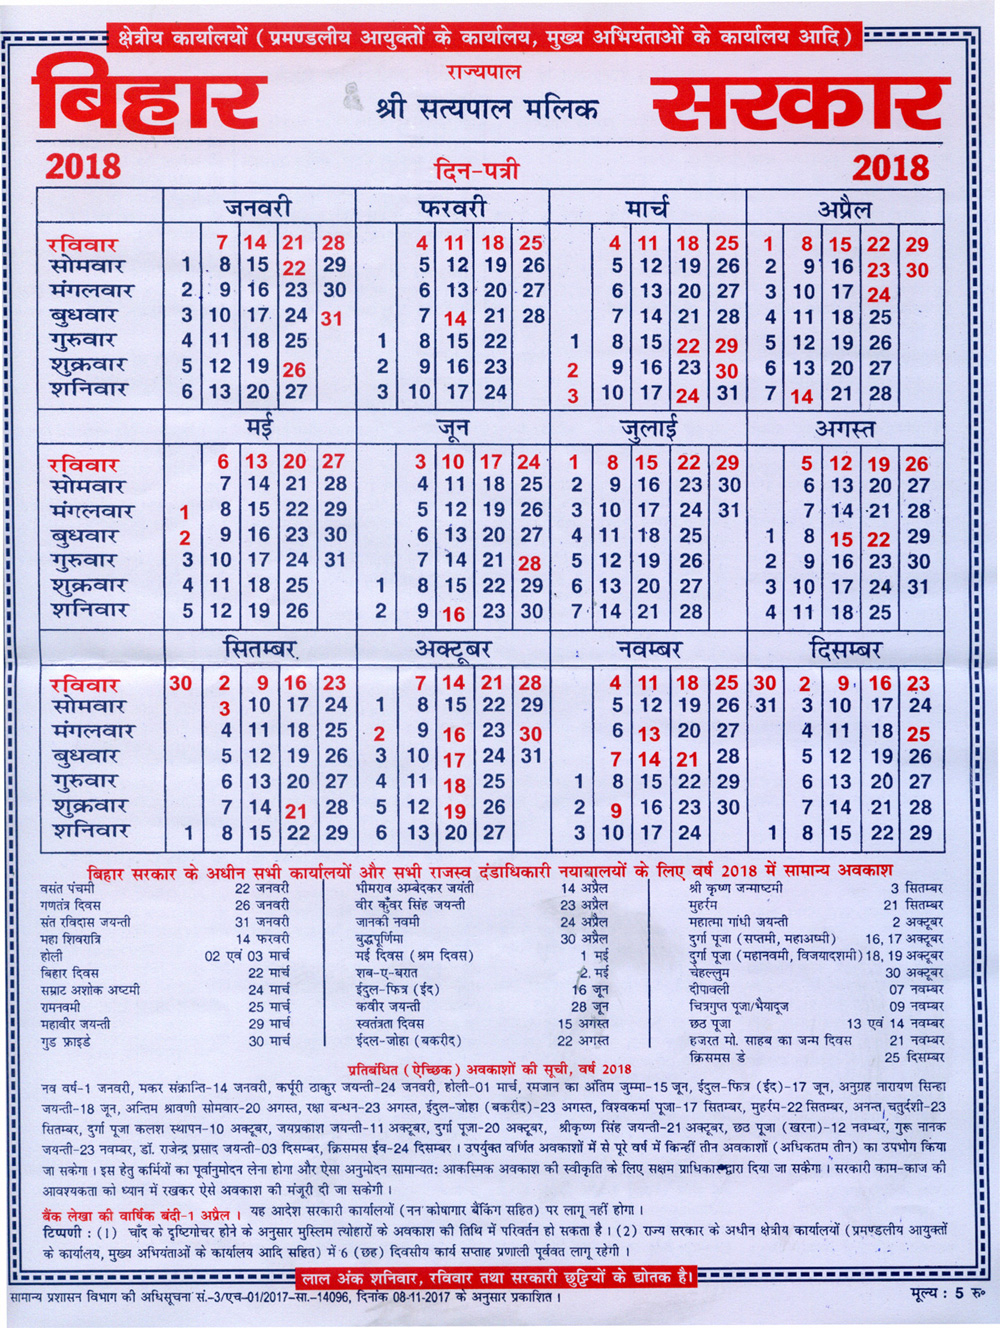 Bihar Govt. Calendar 2018, Bihar Govt. Holiday List, Holiday inside Bihar Govt. Calendar